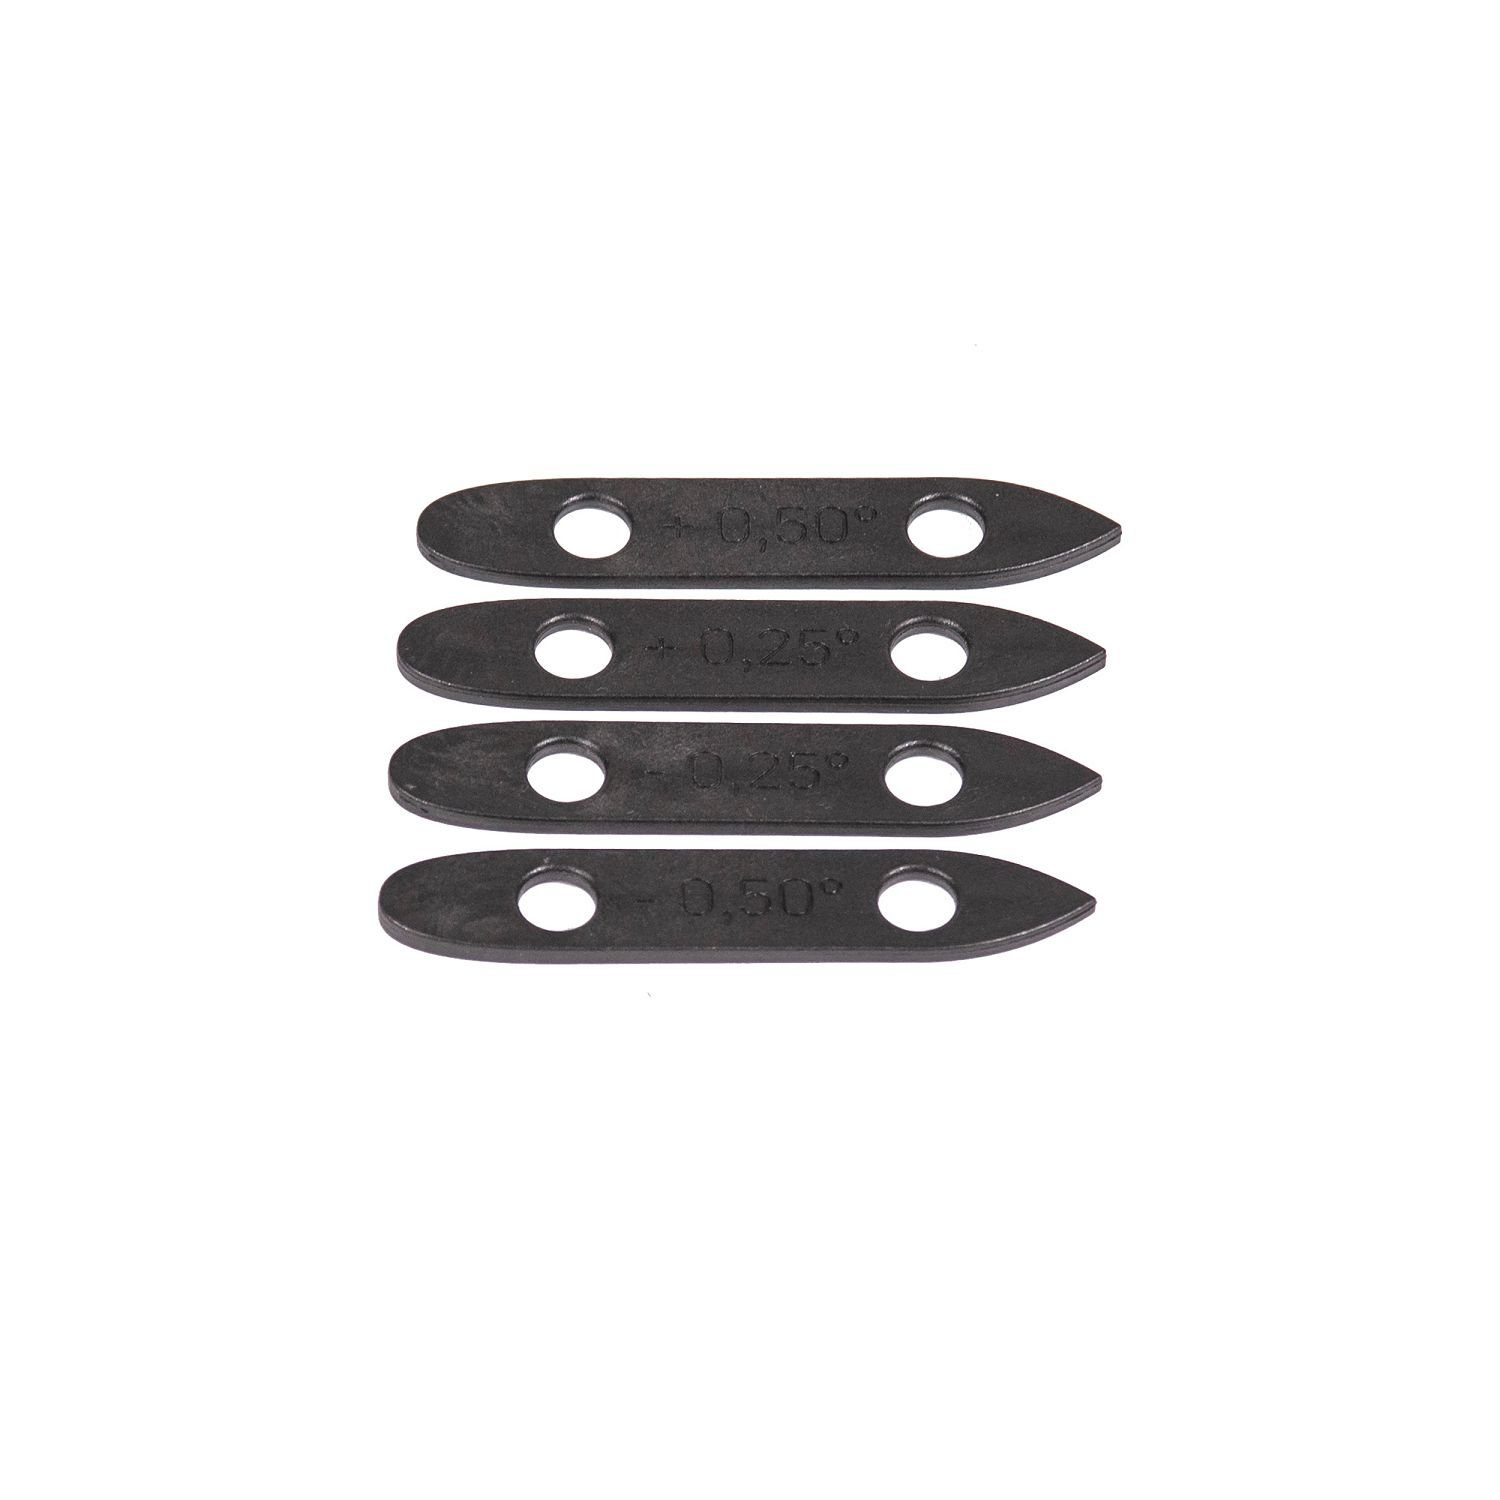 Fanatic SUP-Board Fanatic Foil Parts (4pcs) Wedge Foil Set black